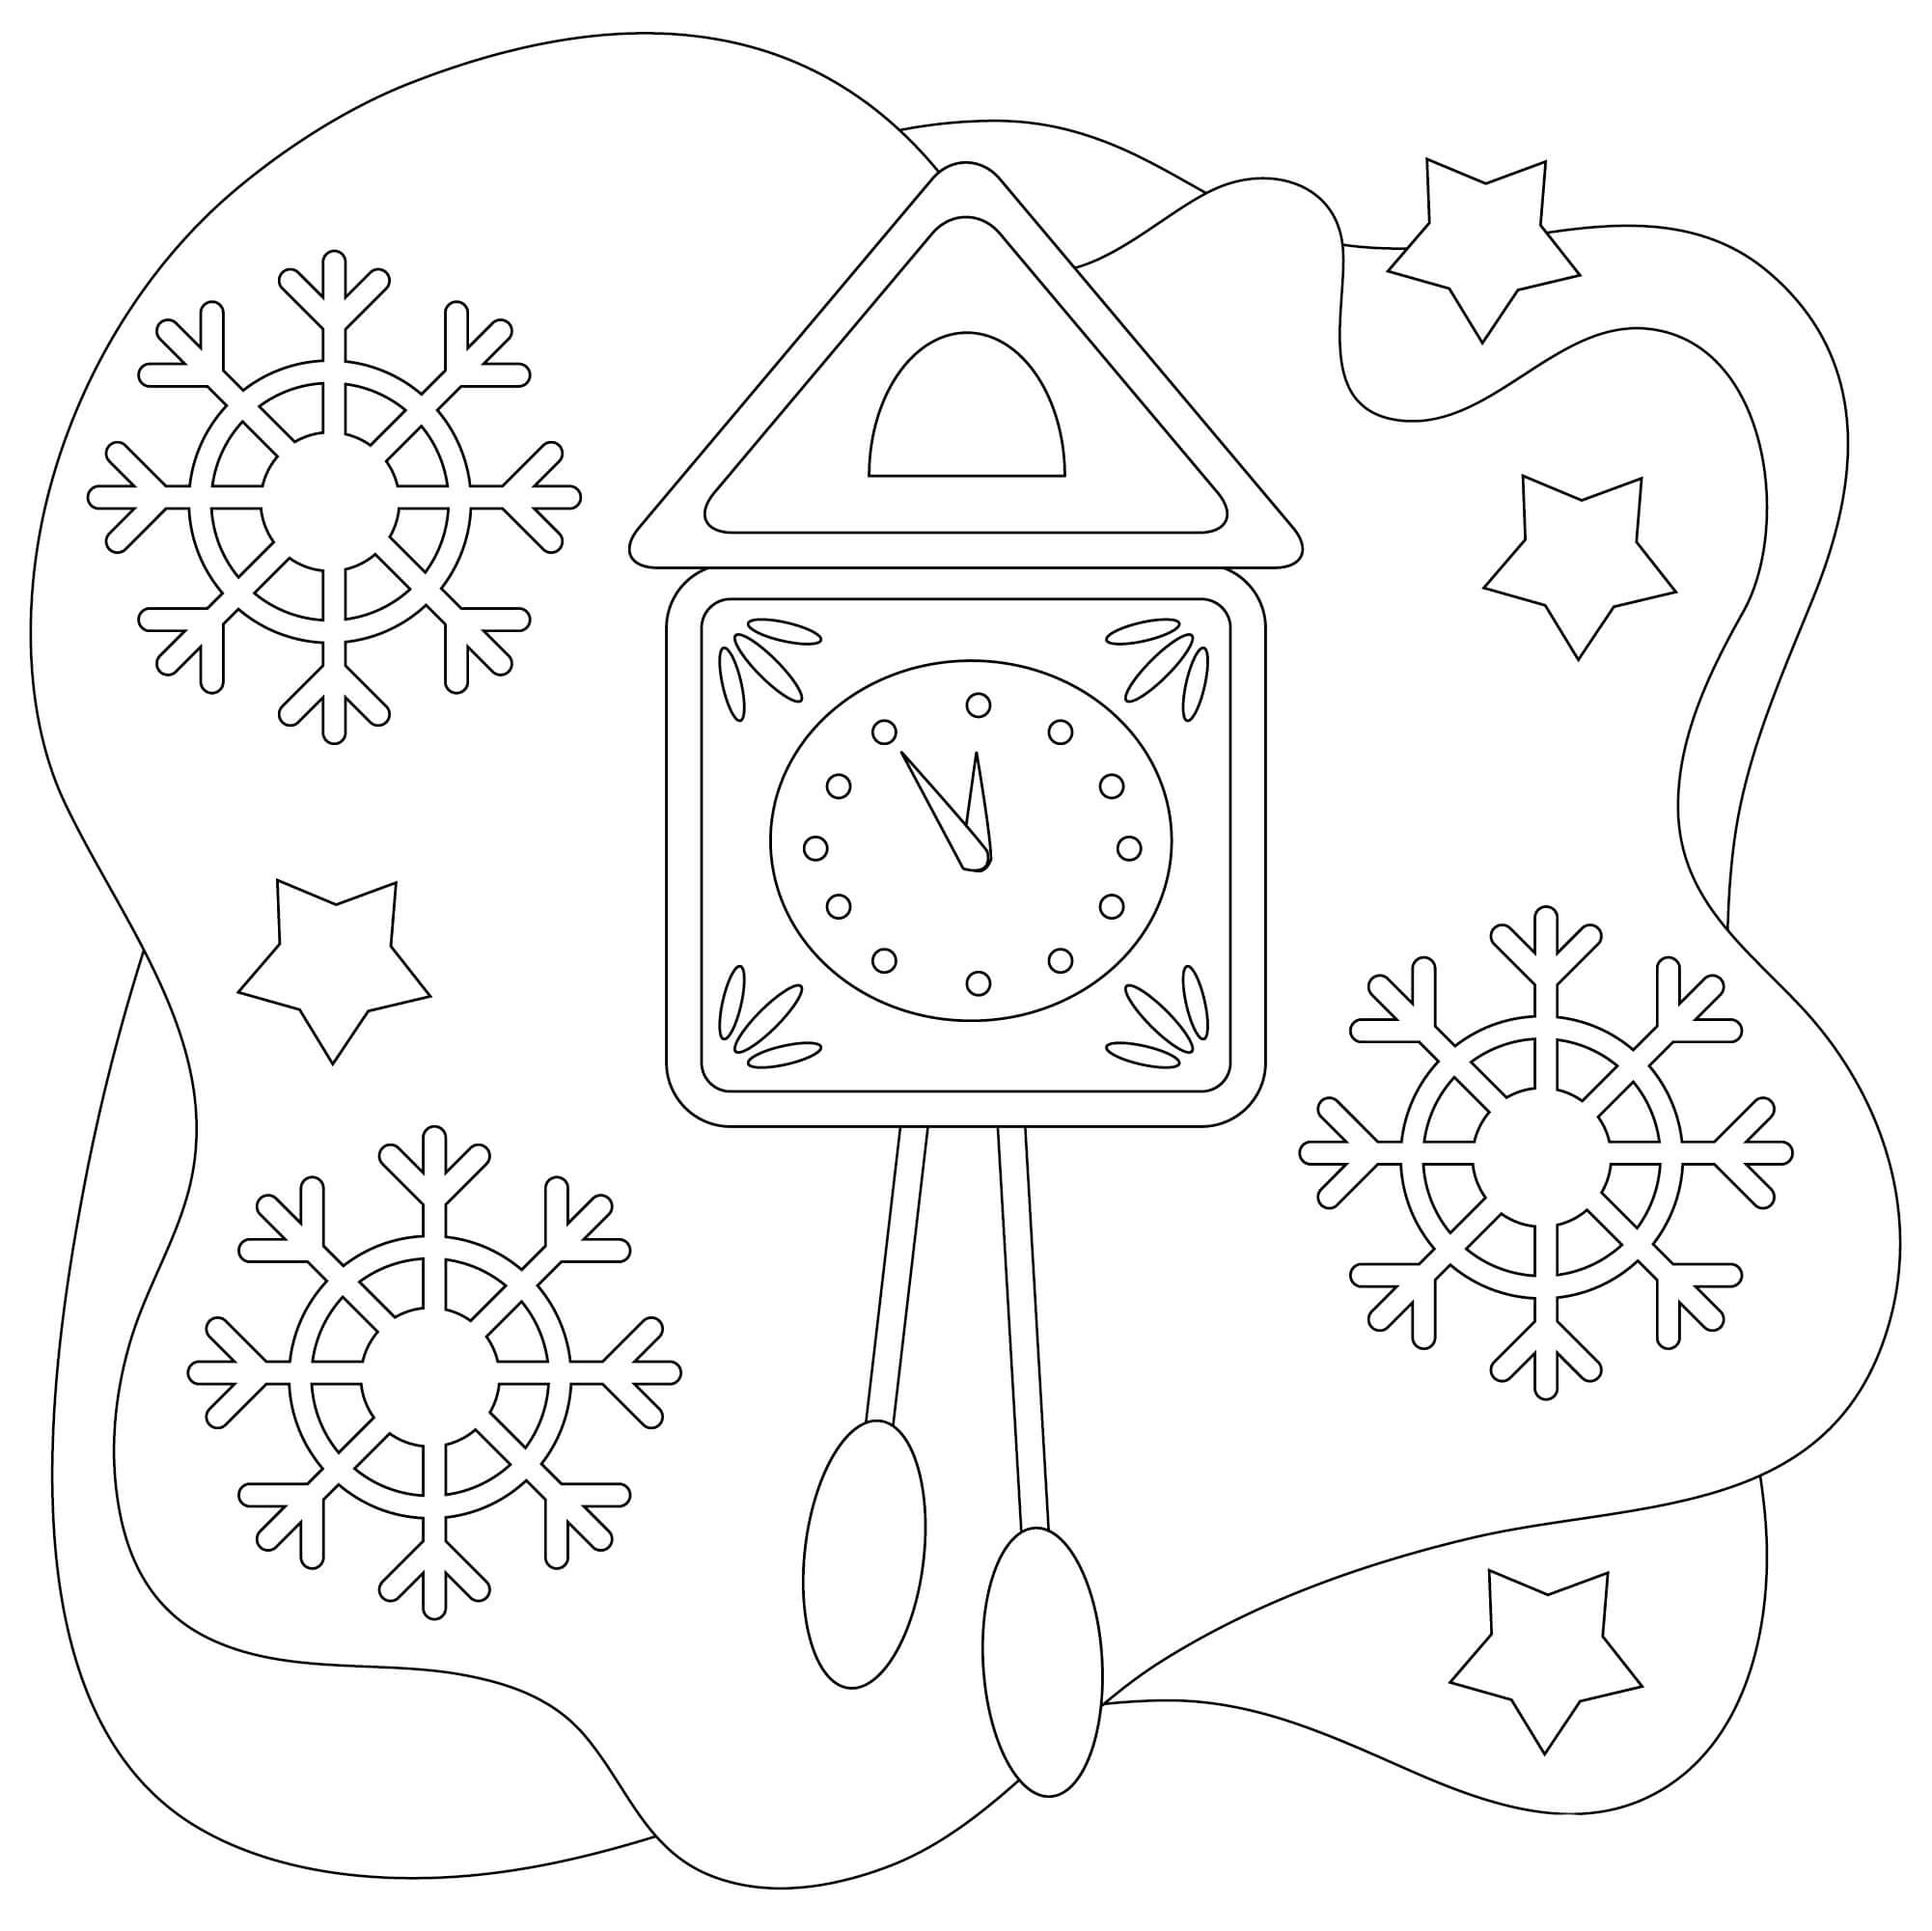 Clock in snow